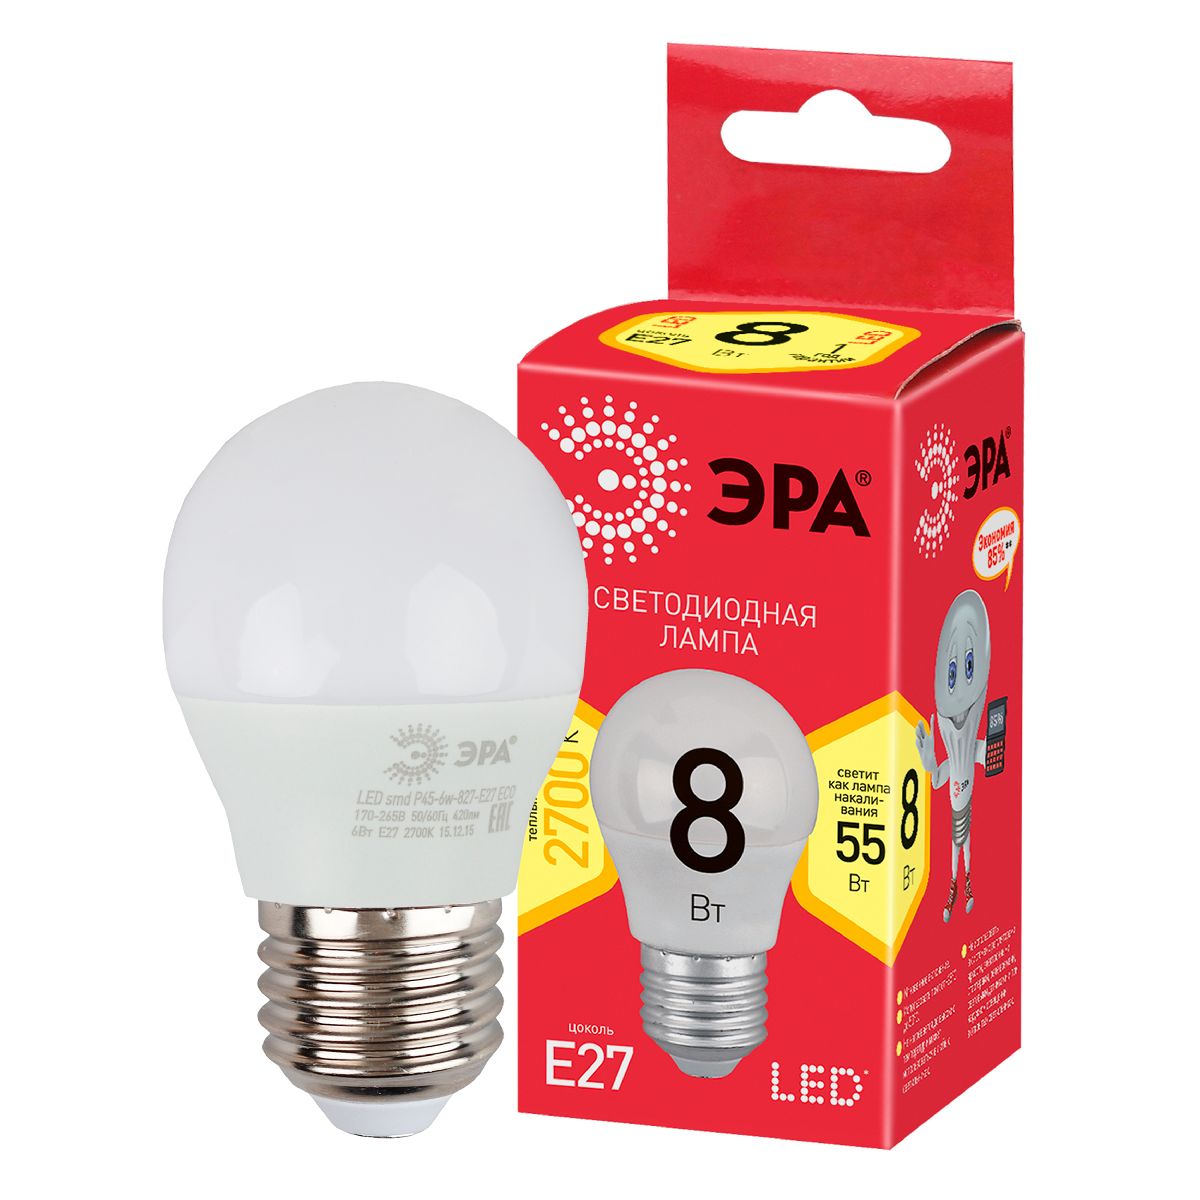 Лампа светодиодная Эра E27 8W 2700K LED P45-8W-827-E27 R Б0053028